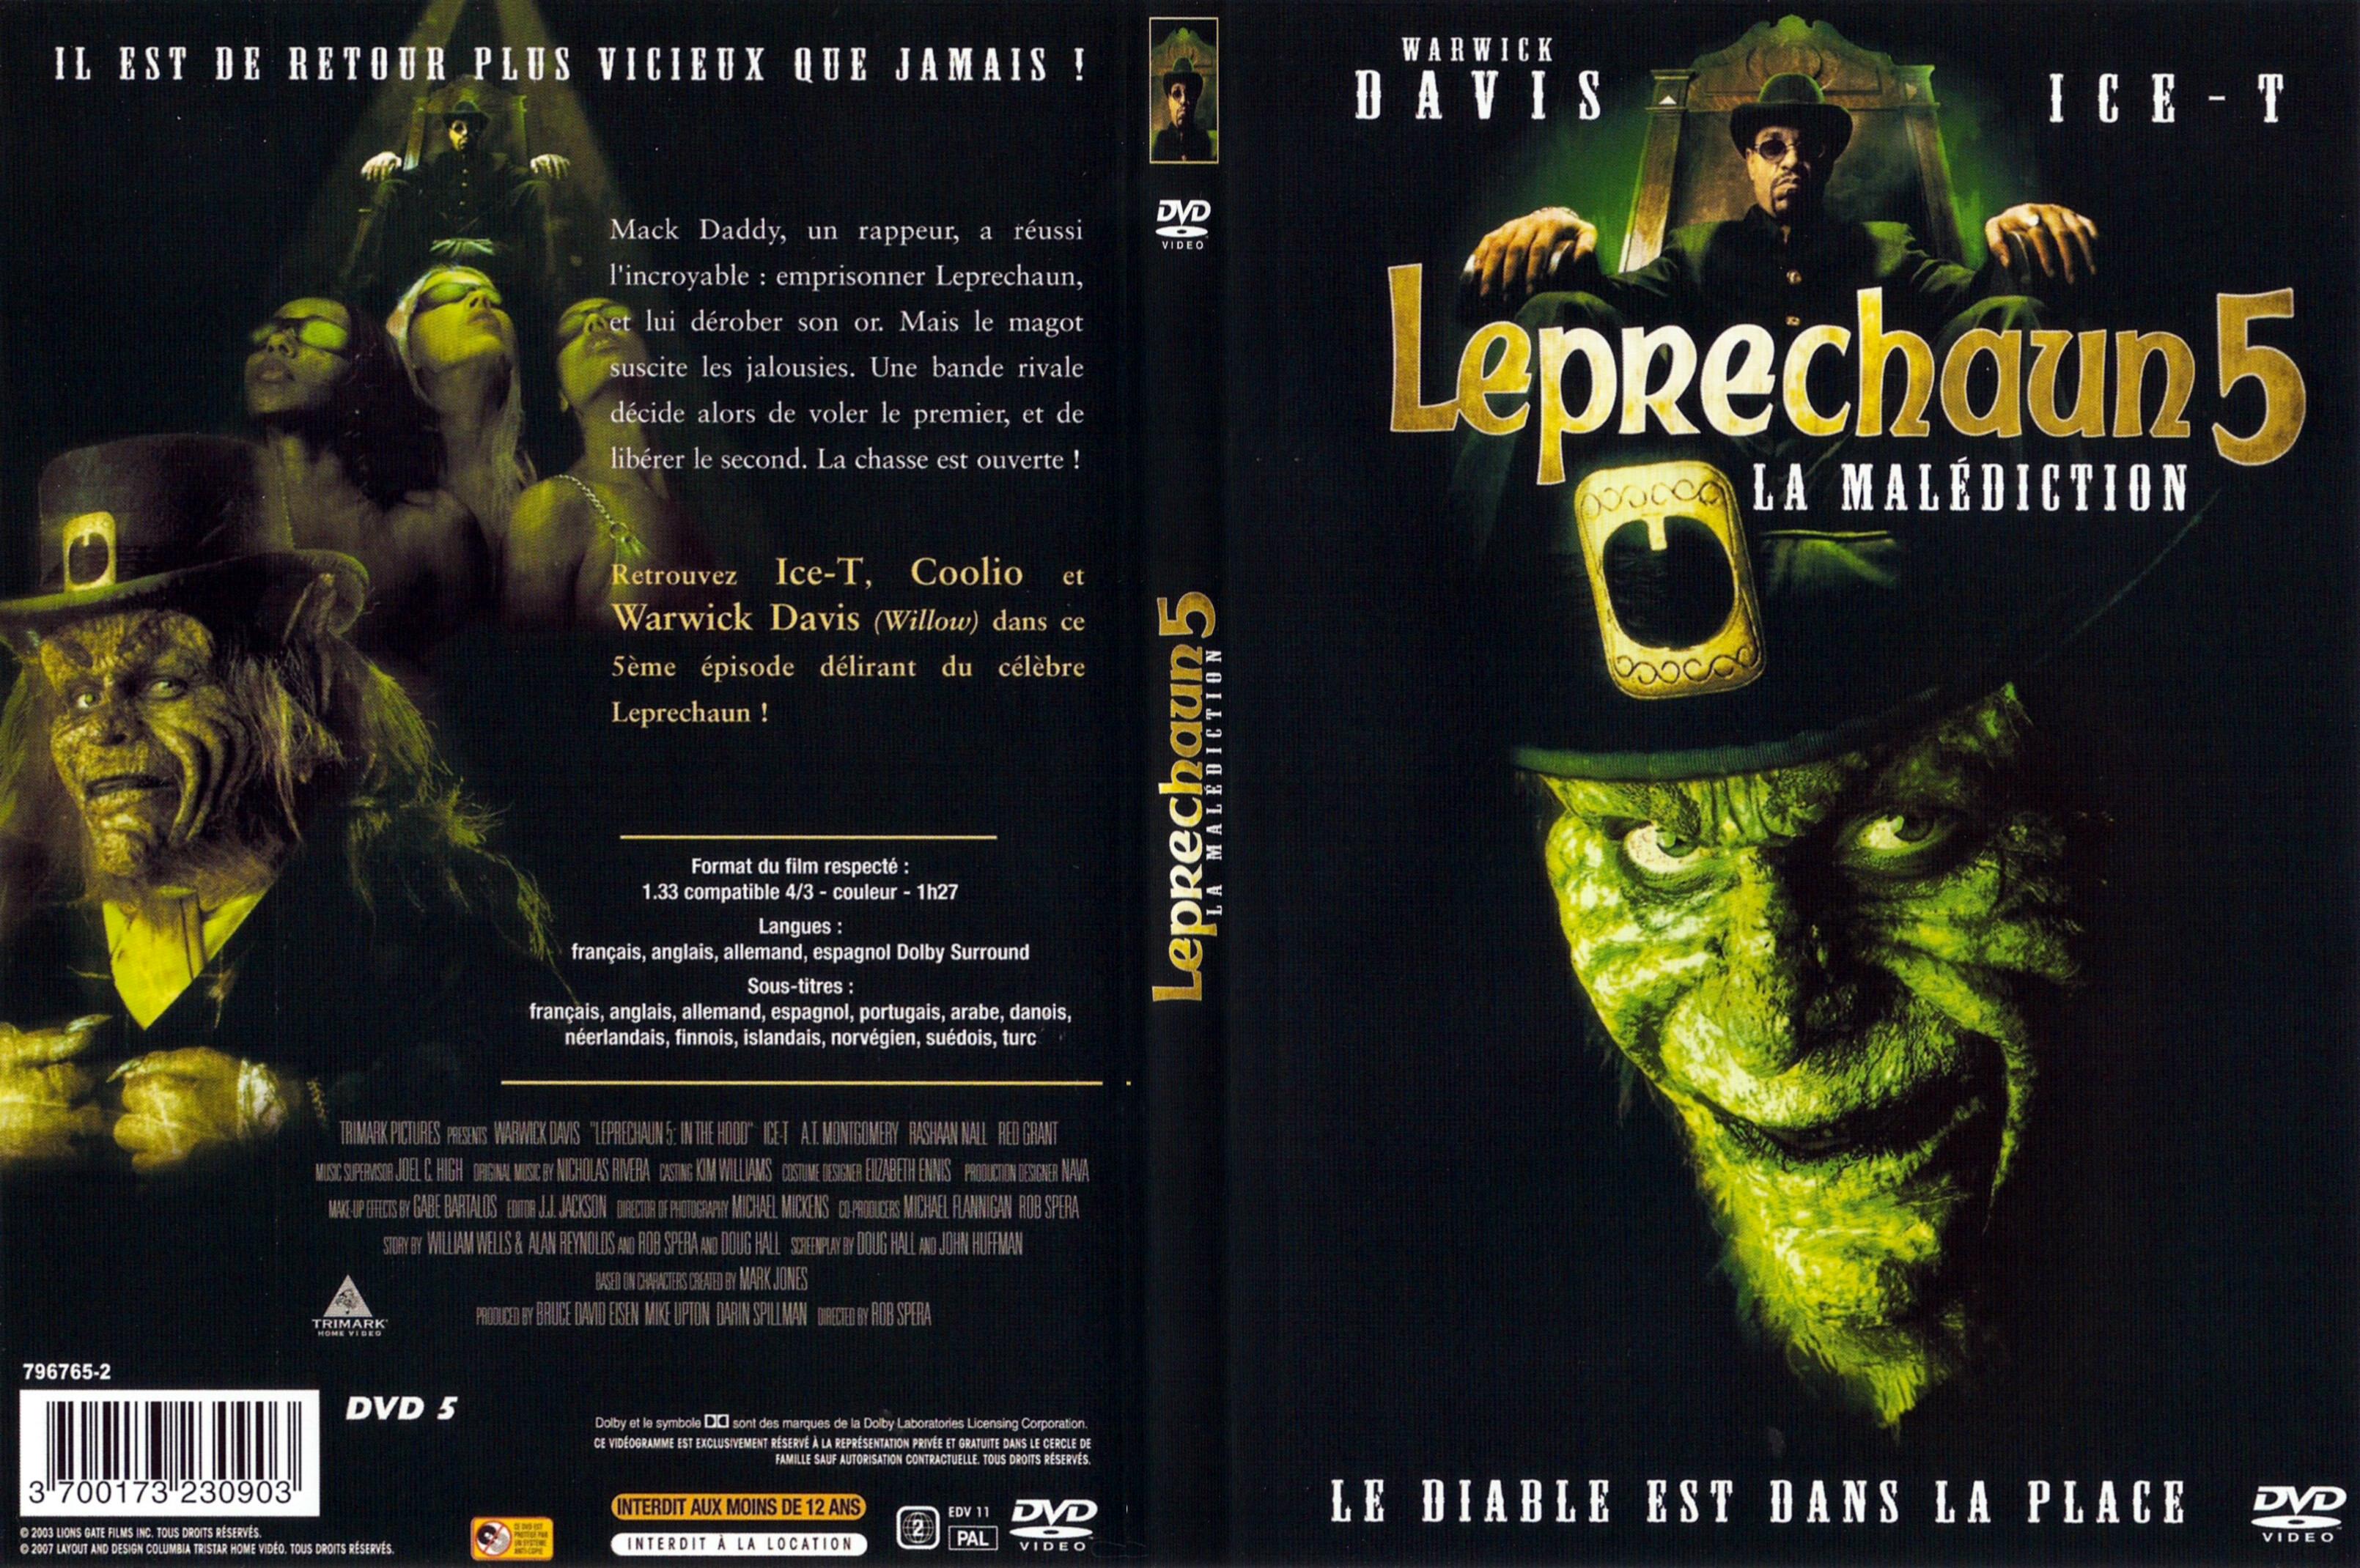 Jaquette DVD Leprechaun 5 - La malediction - SLIM